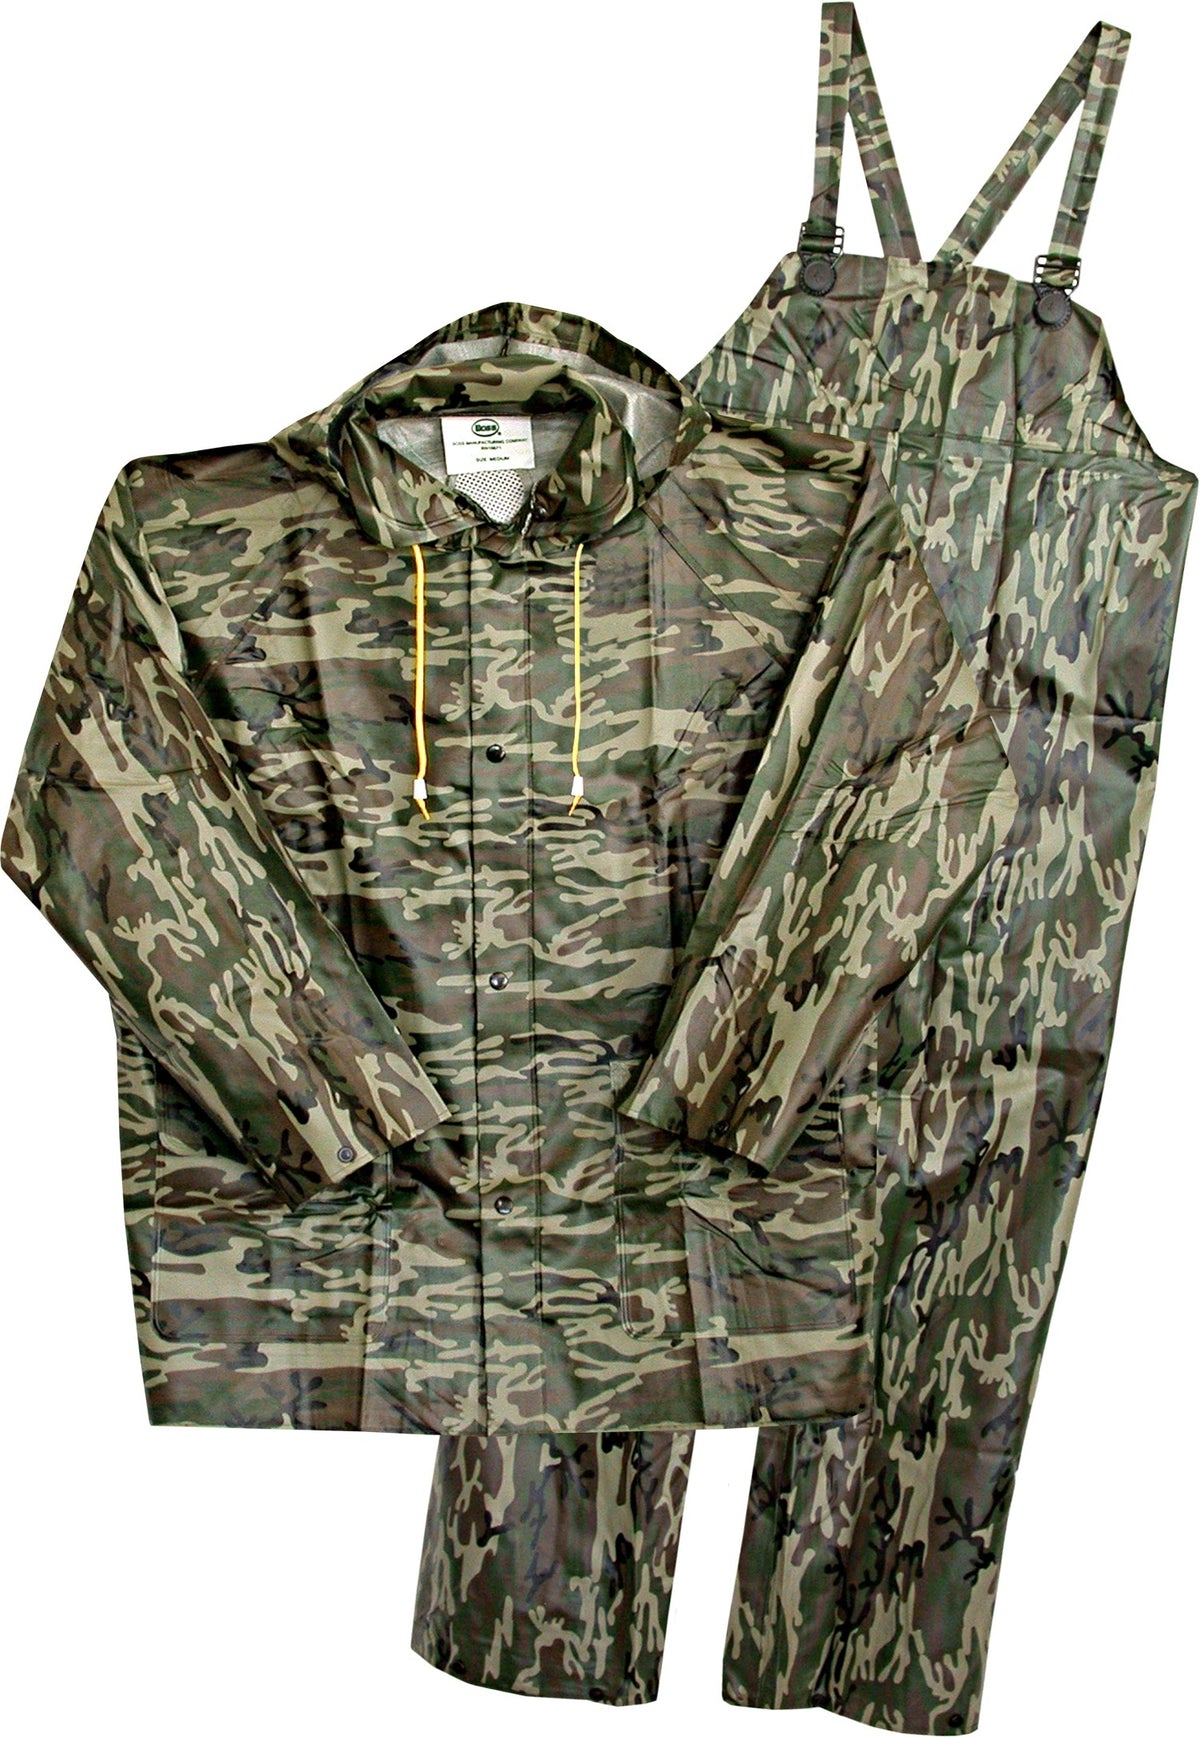 buy hunting clothing & apparel at cheap rate in bulk. wholesale & retail bulk camping supplies store.